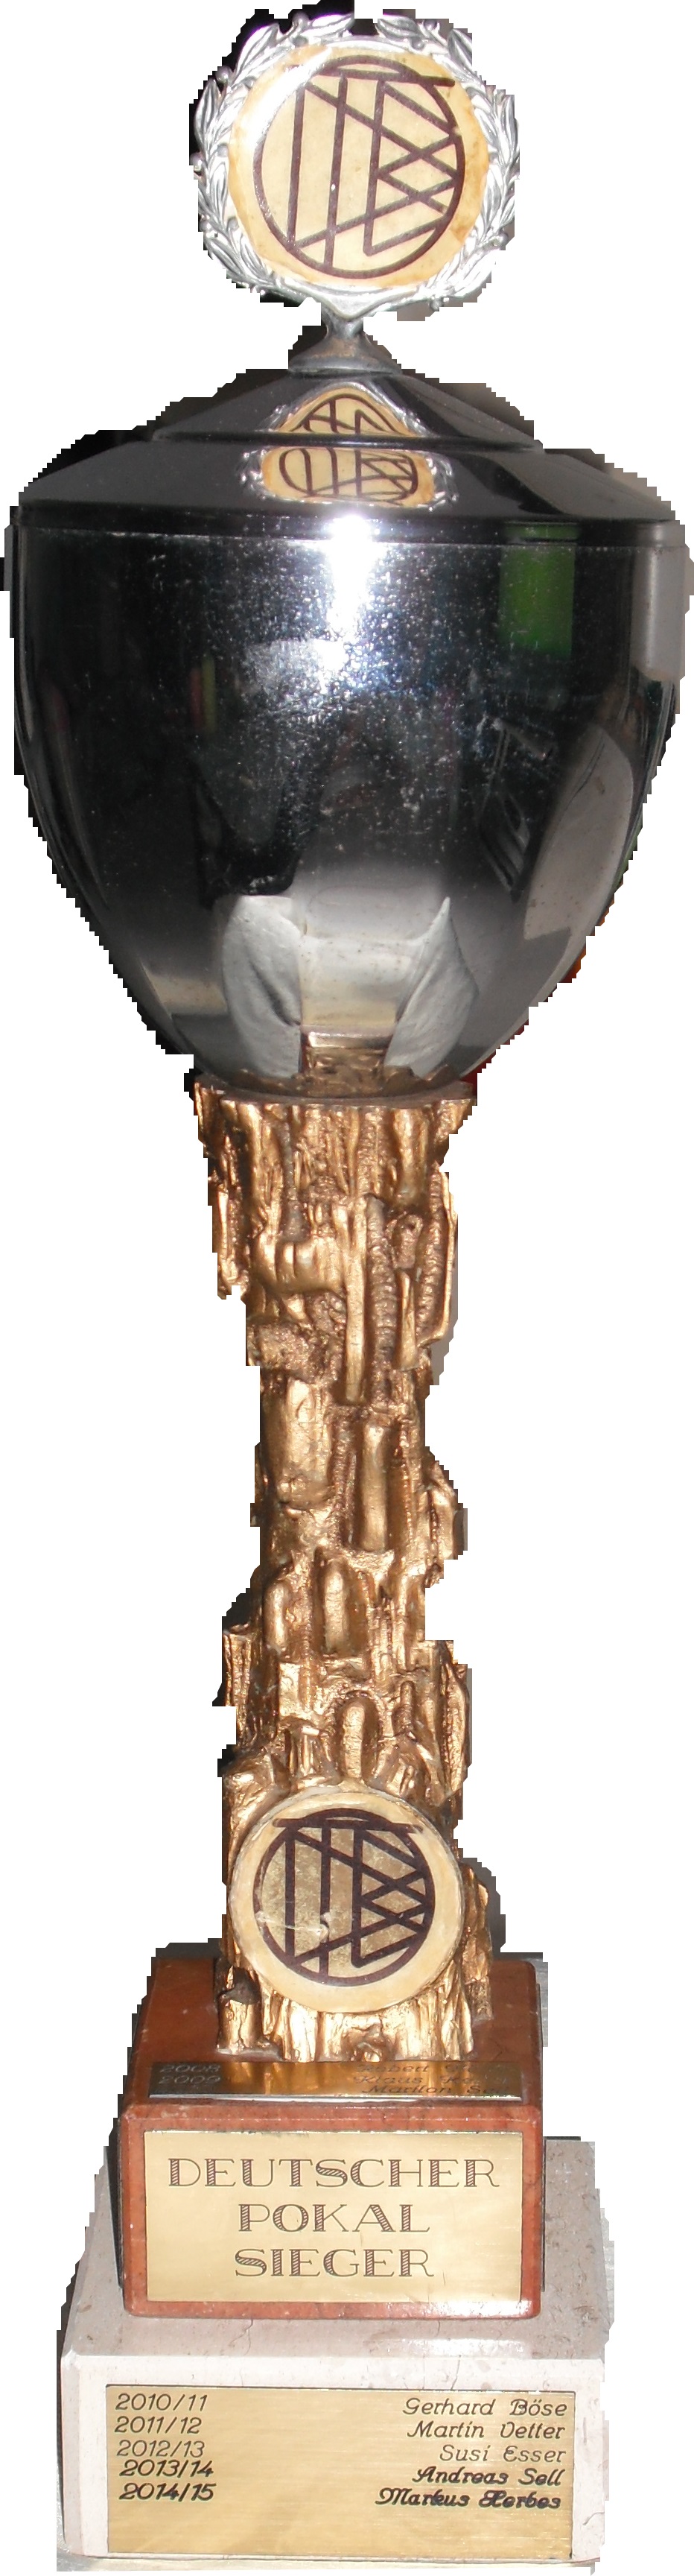 DTB-Pokal